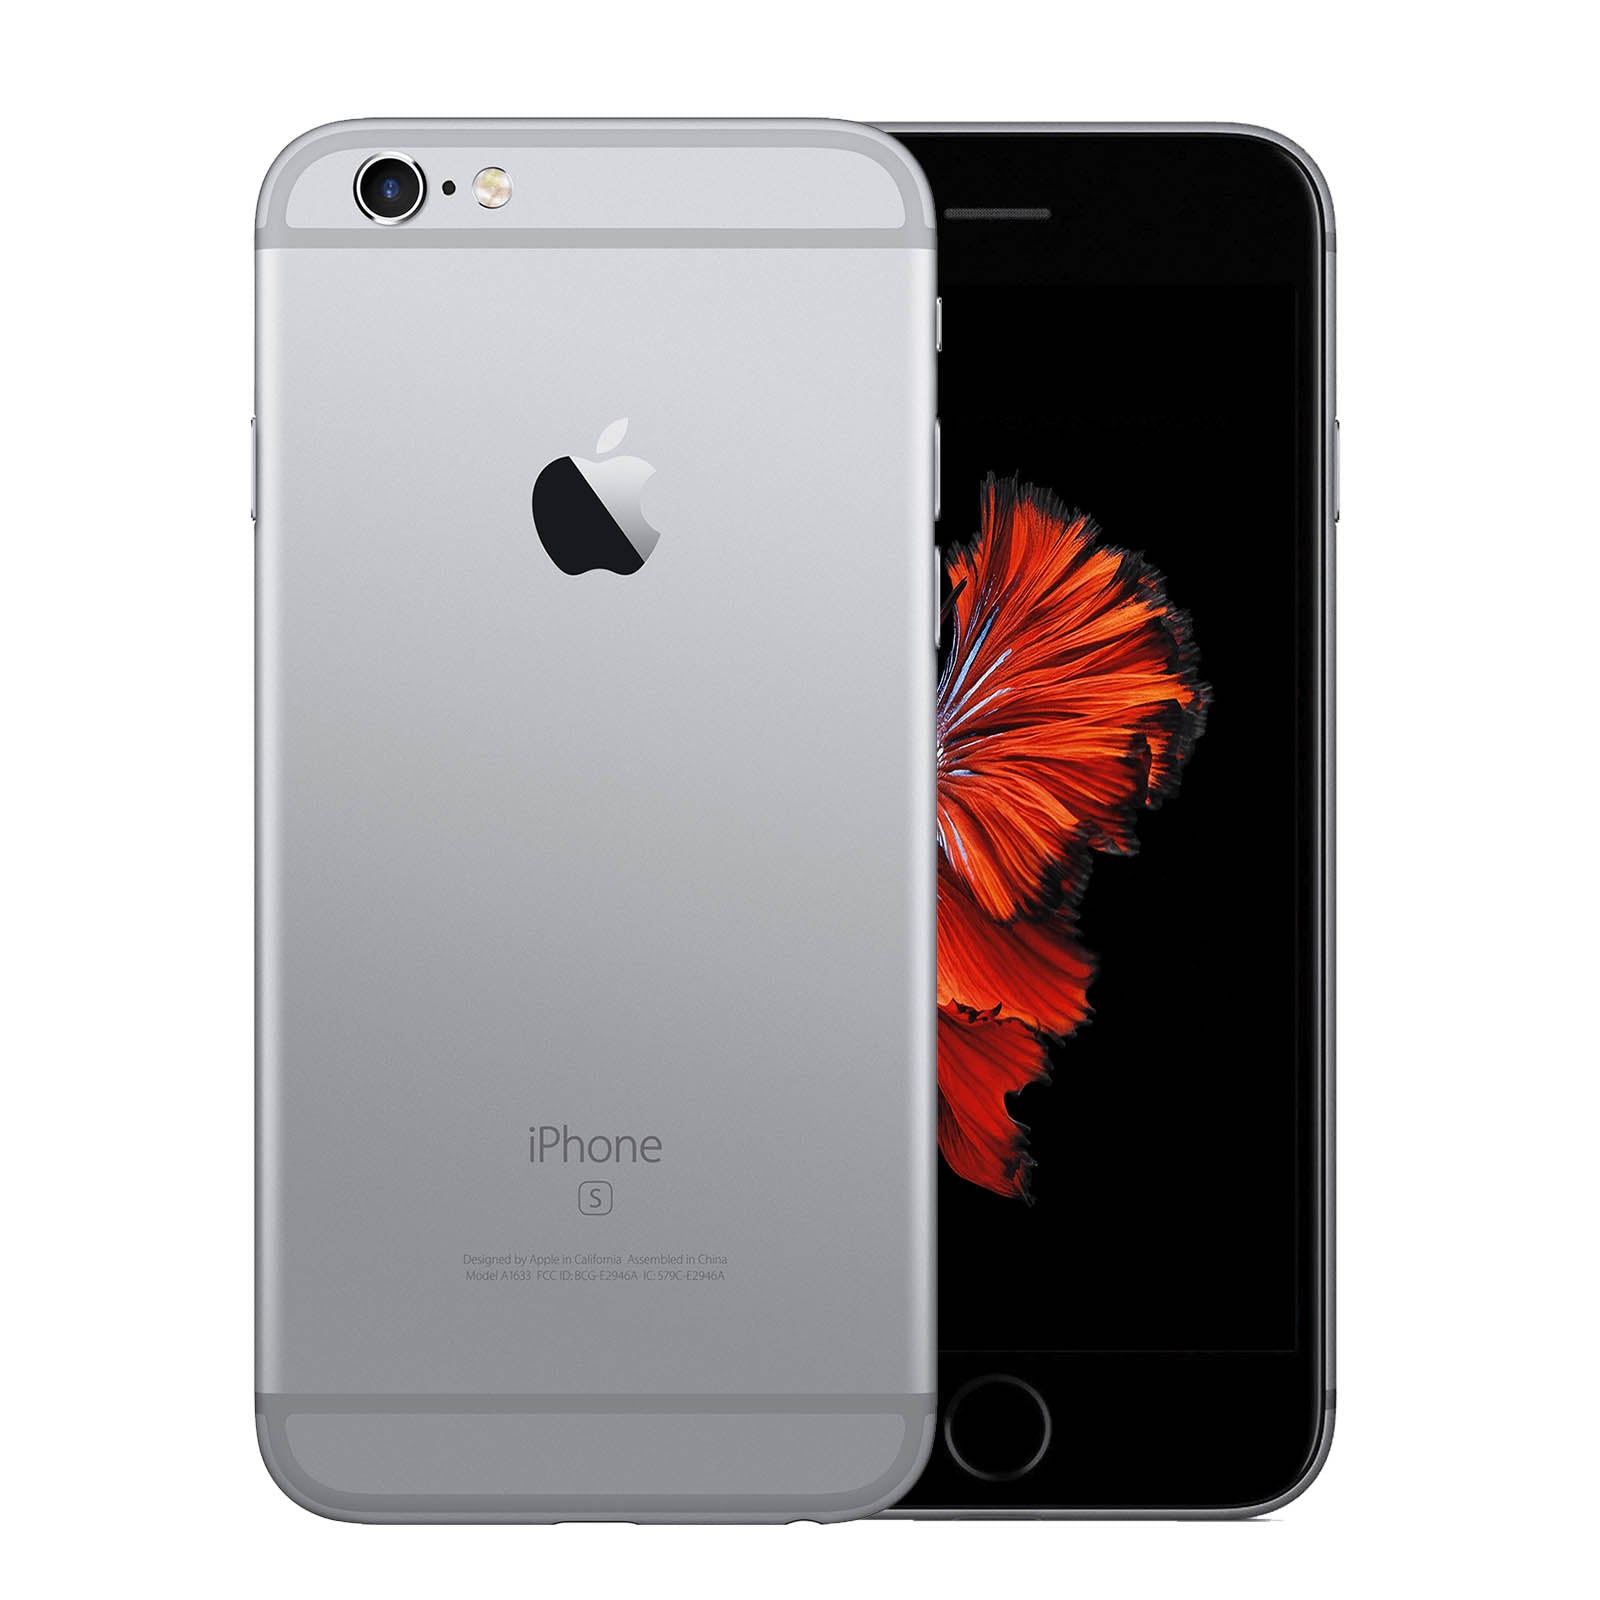 Apple iPhone 6S 16GB Space Grey Very Good - Unlocked